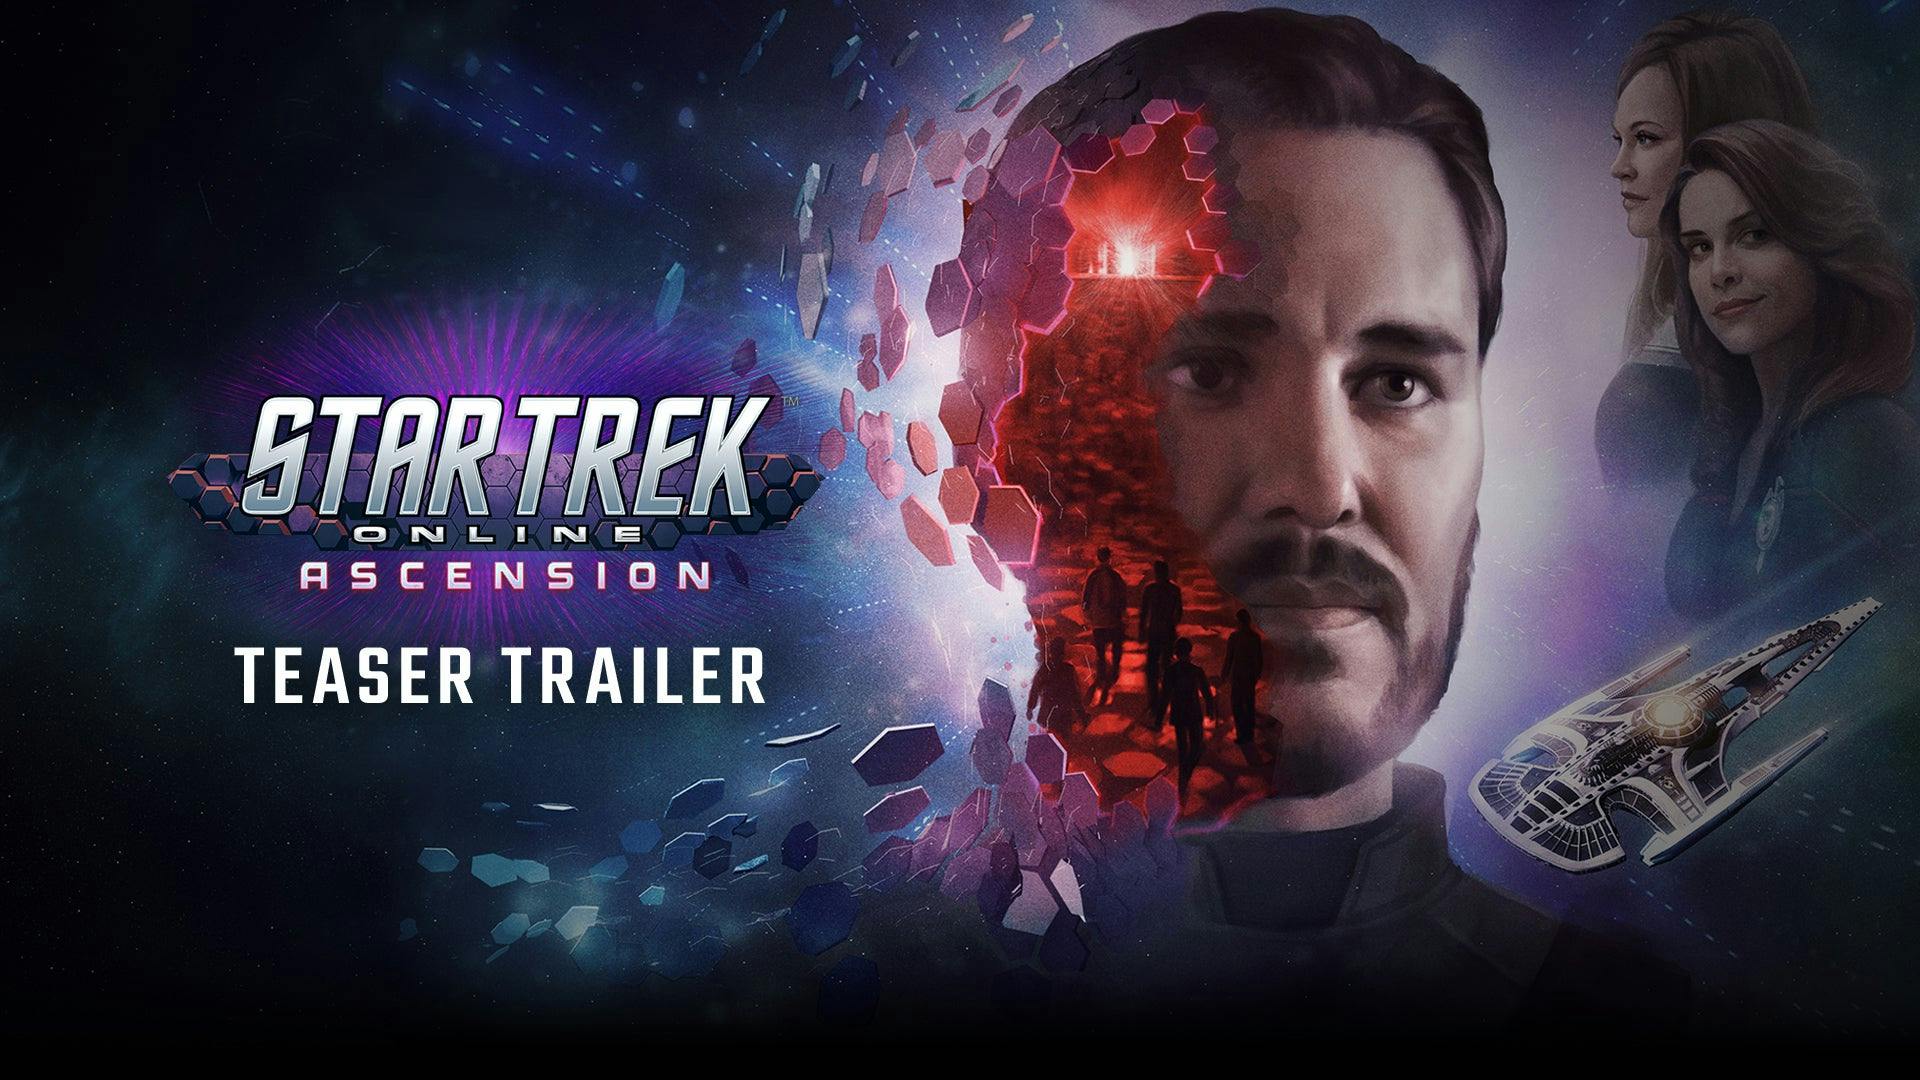 Mirror Wesley Crusher from Star Trek Online: Ascension